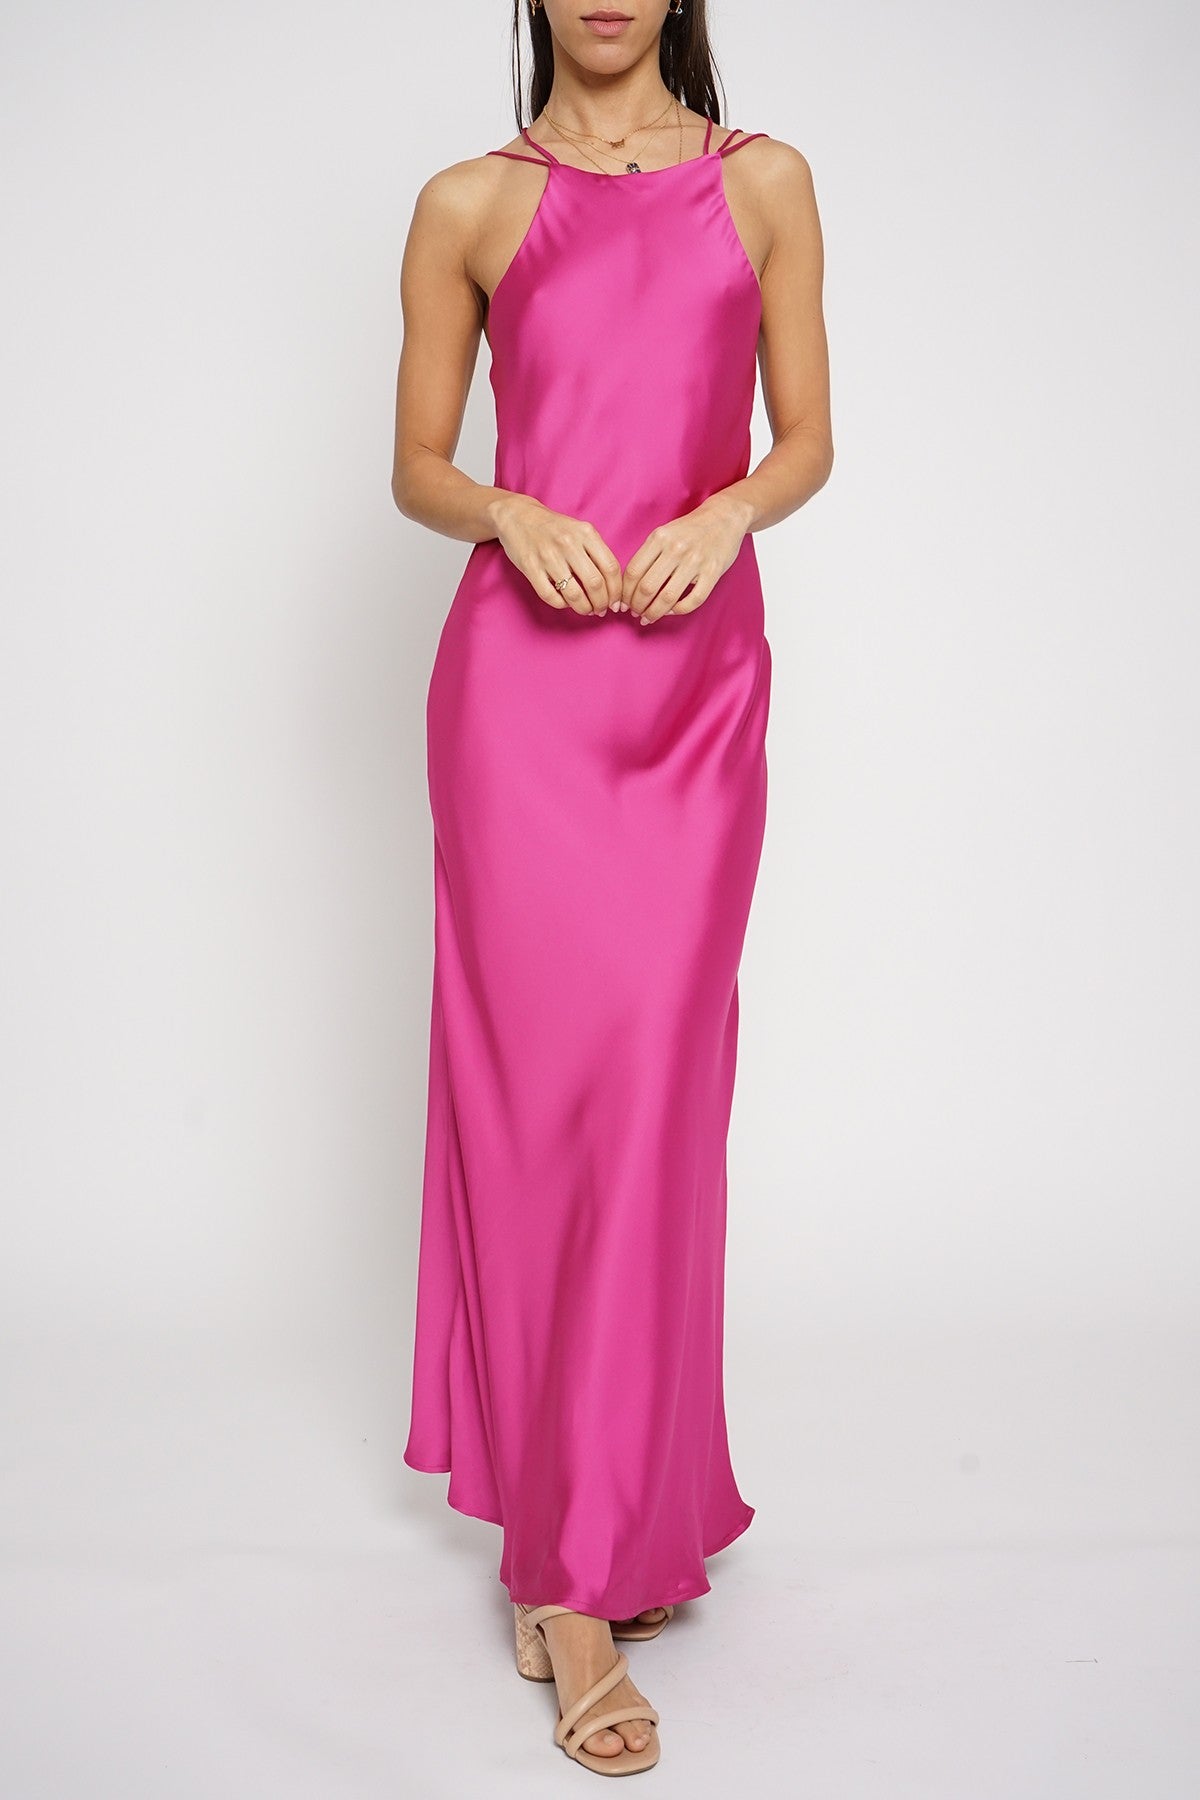 Tamara - rosa - Cindel vestidos maxi, midi, mini, para toda ocasion, largos, de fiesta, de boda